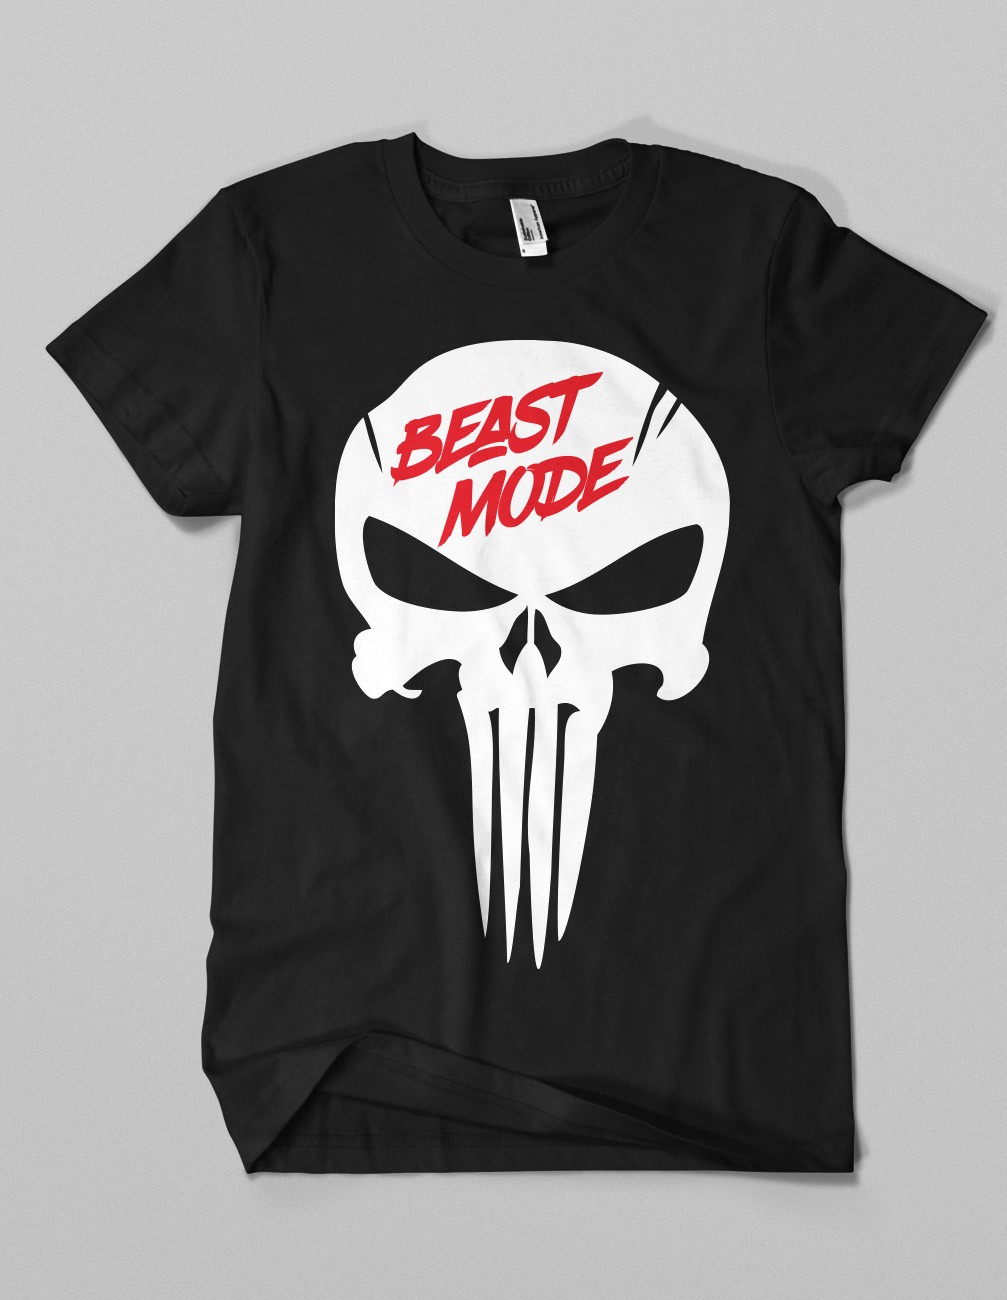 Mil millones sonriendo salud Camiseta The Punisher "BEAST MODE"